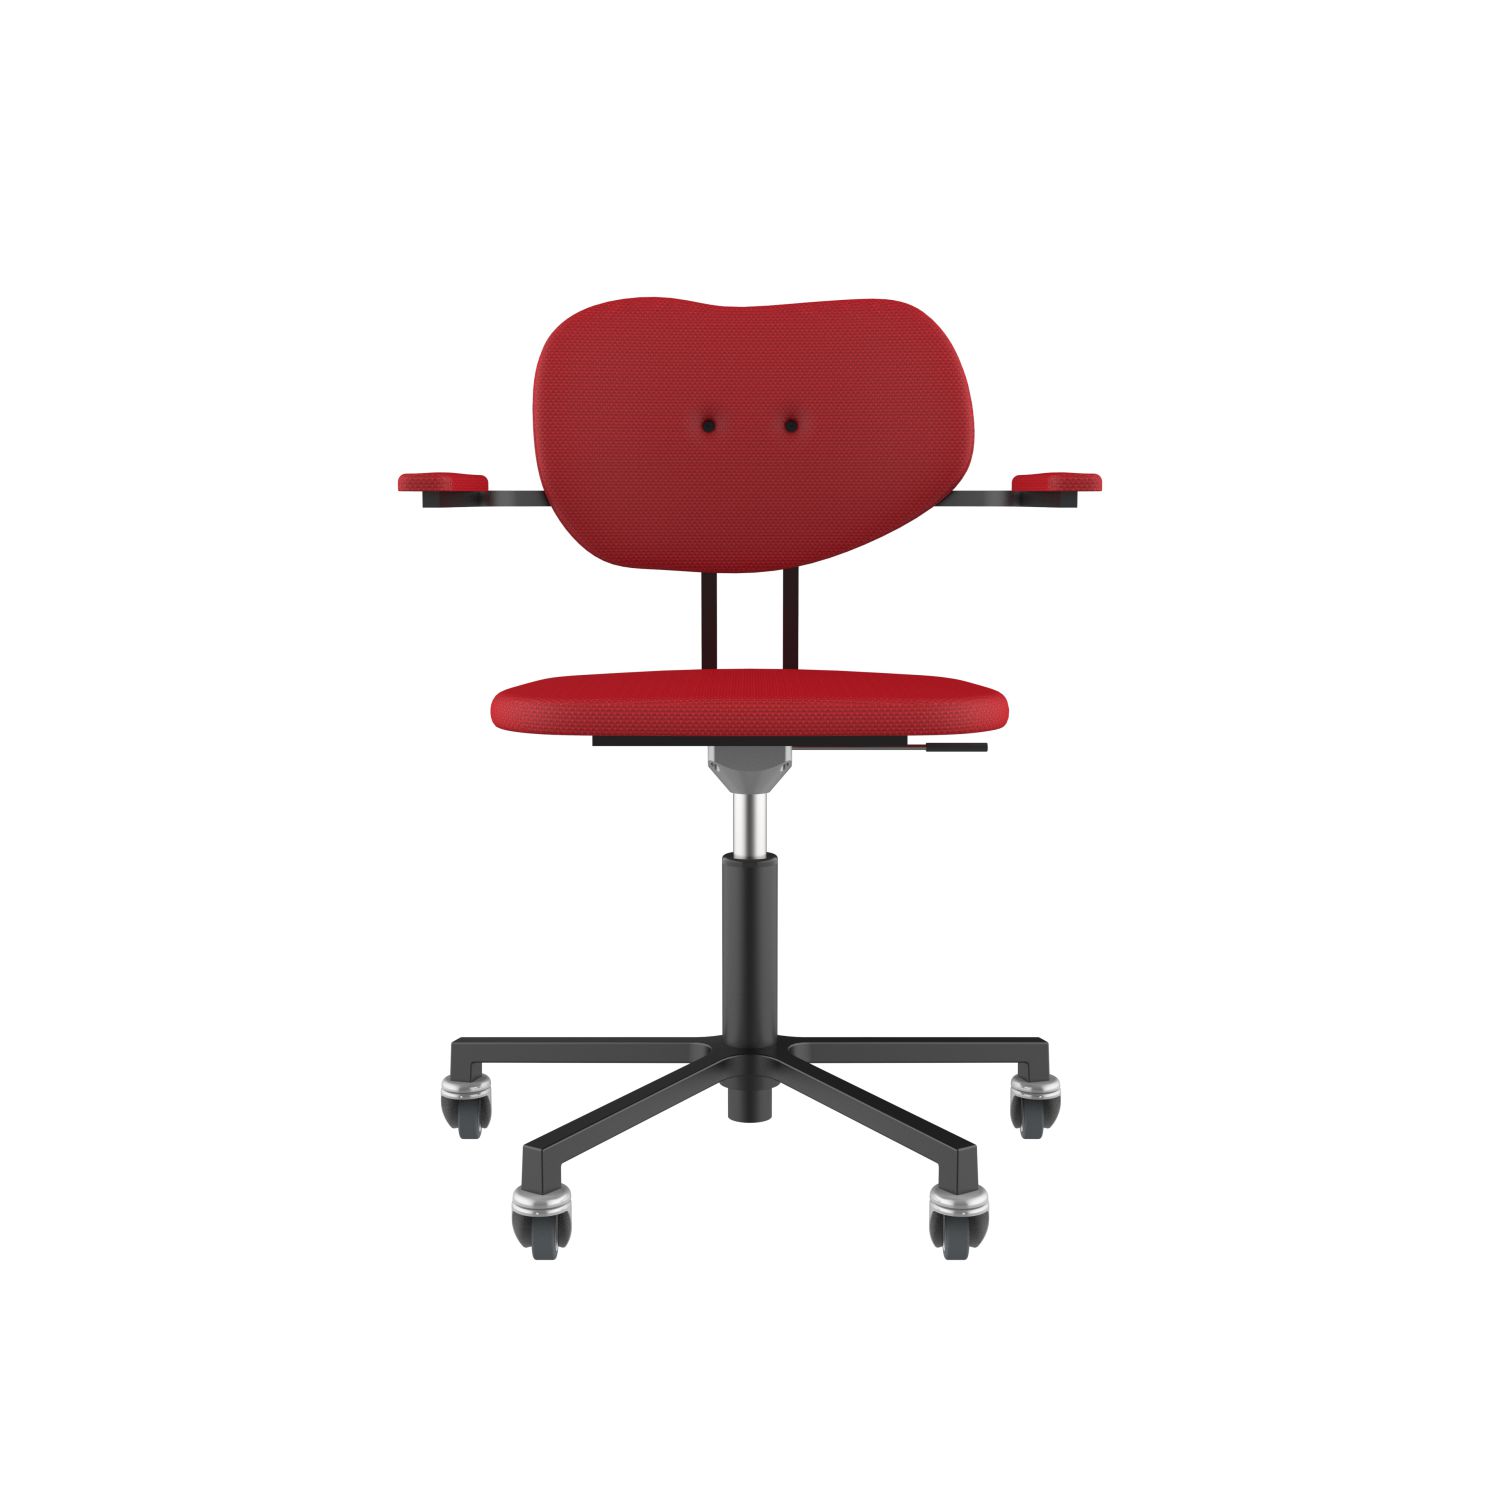 lensvelt maarten baas office chair with armrests backrest b grenada red 010 black ral9005 soft wheels